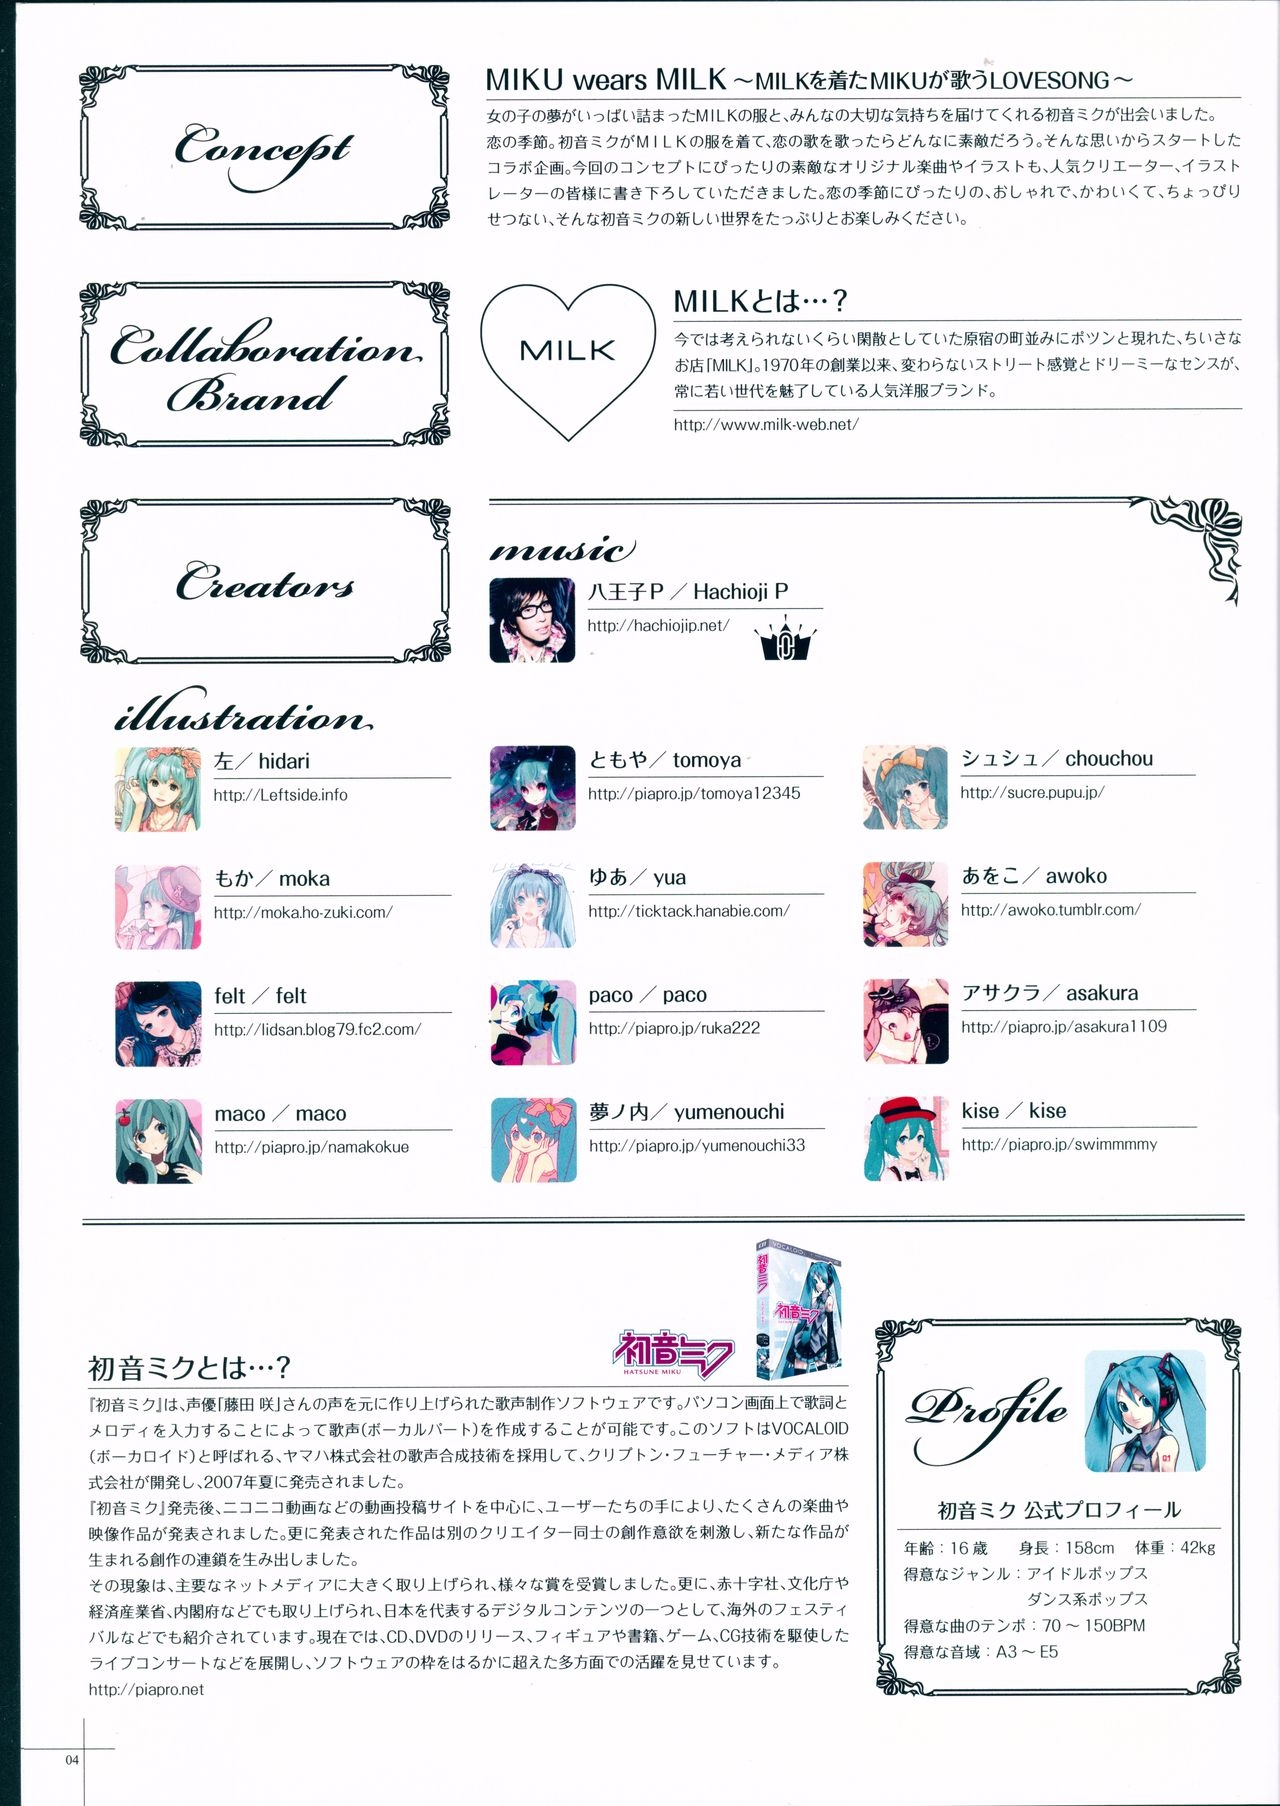 [Various] Milk Heart illustration booklet - Miku wears Milk (Vocaloid) 4